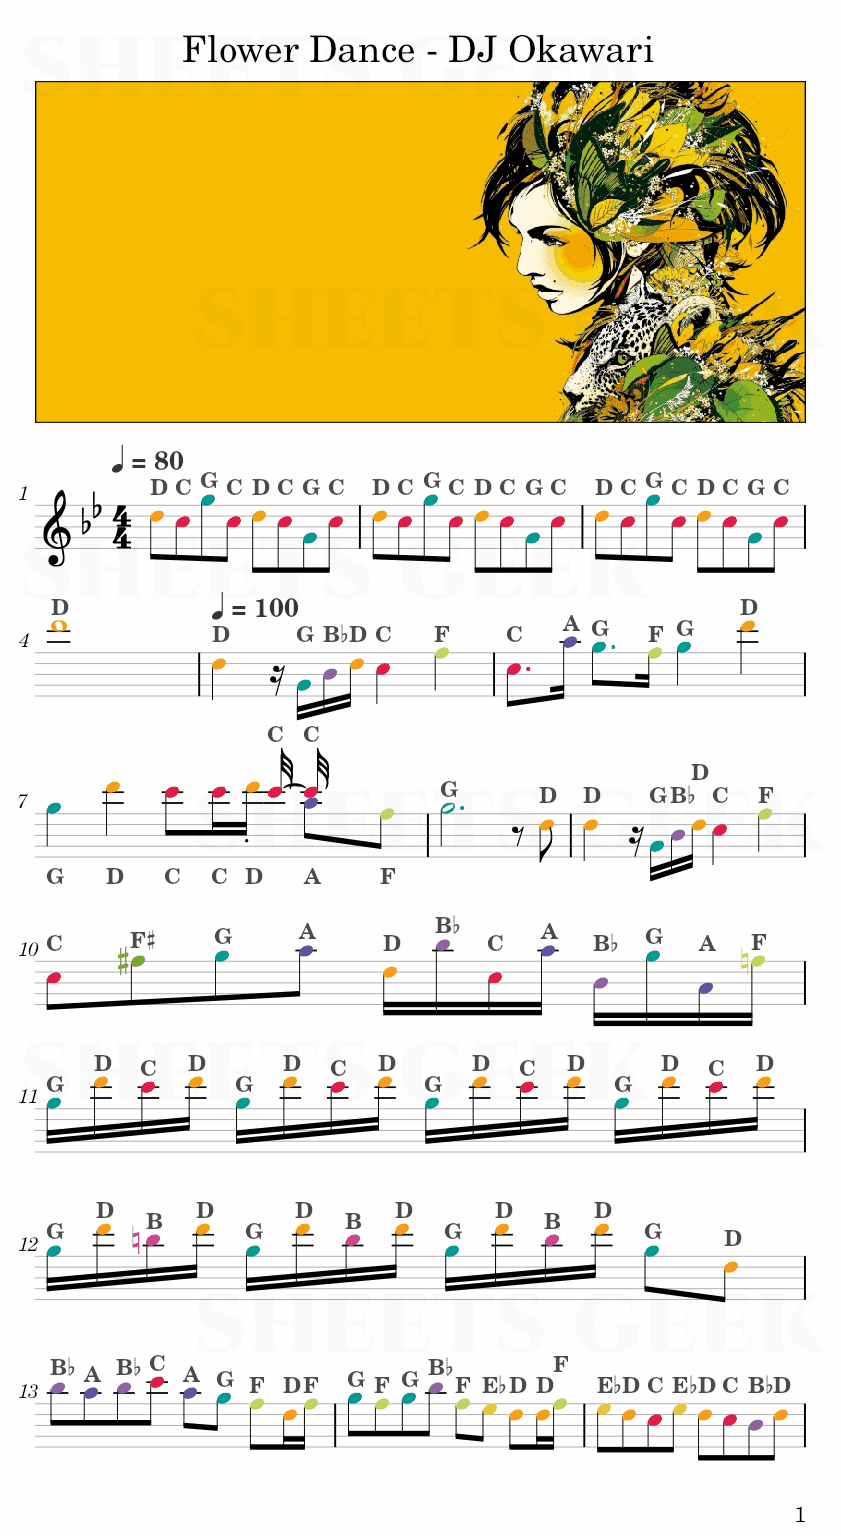 Flower Dance - DJ Okawari Easy Sheet Music Free for piano, keyboard, flute, violin, sax, cello page 1